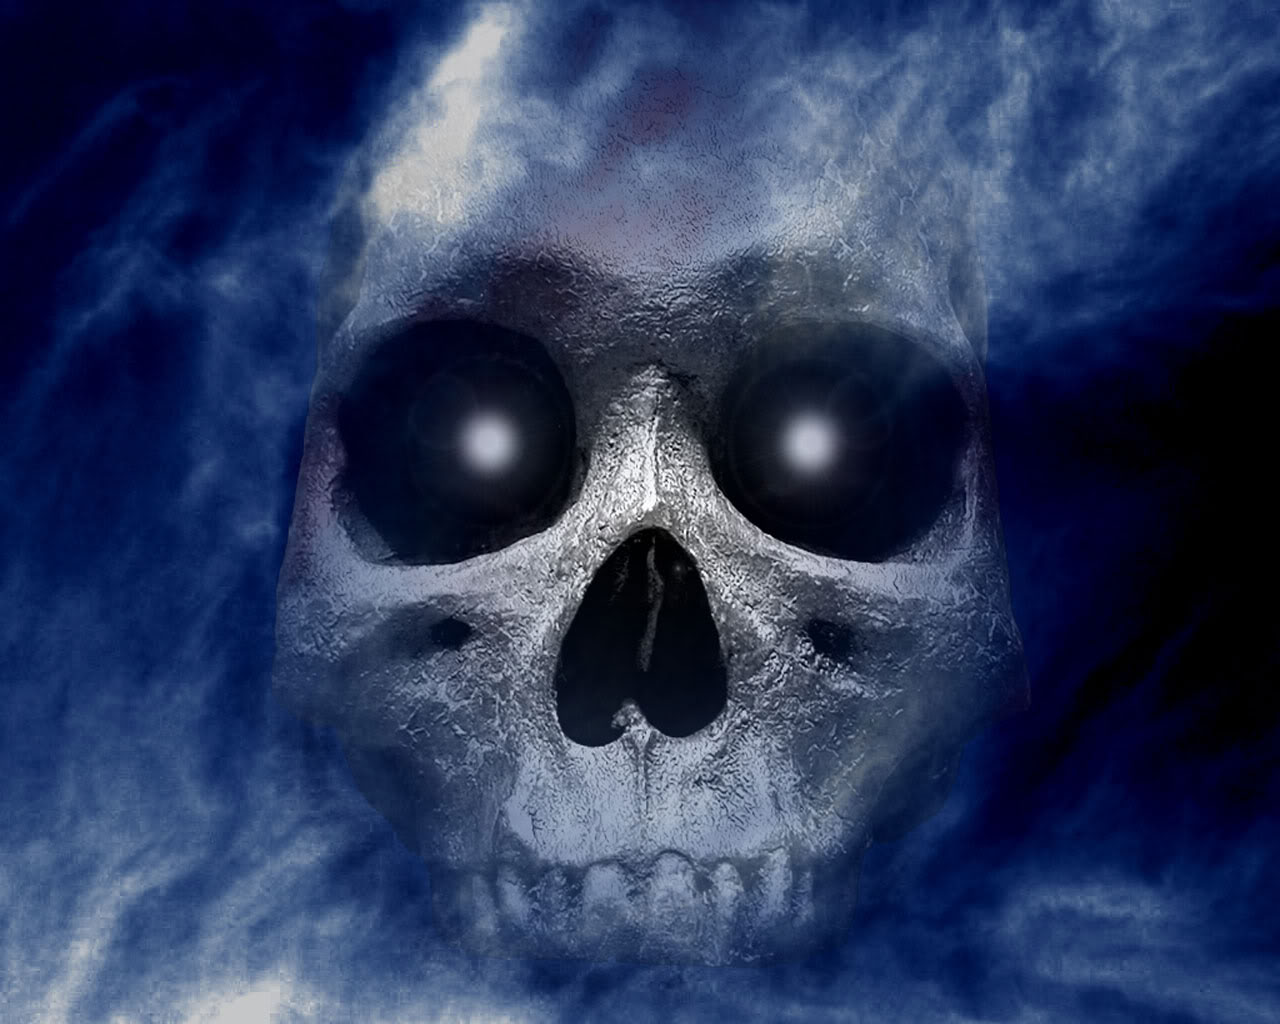 Gallery For Gt Scary Skull Wallpaper